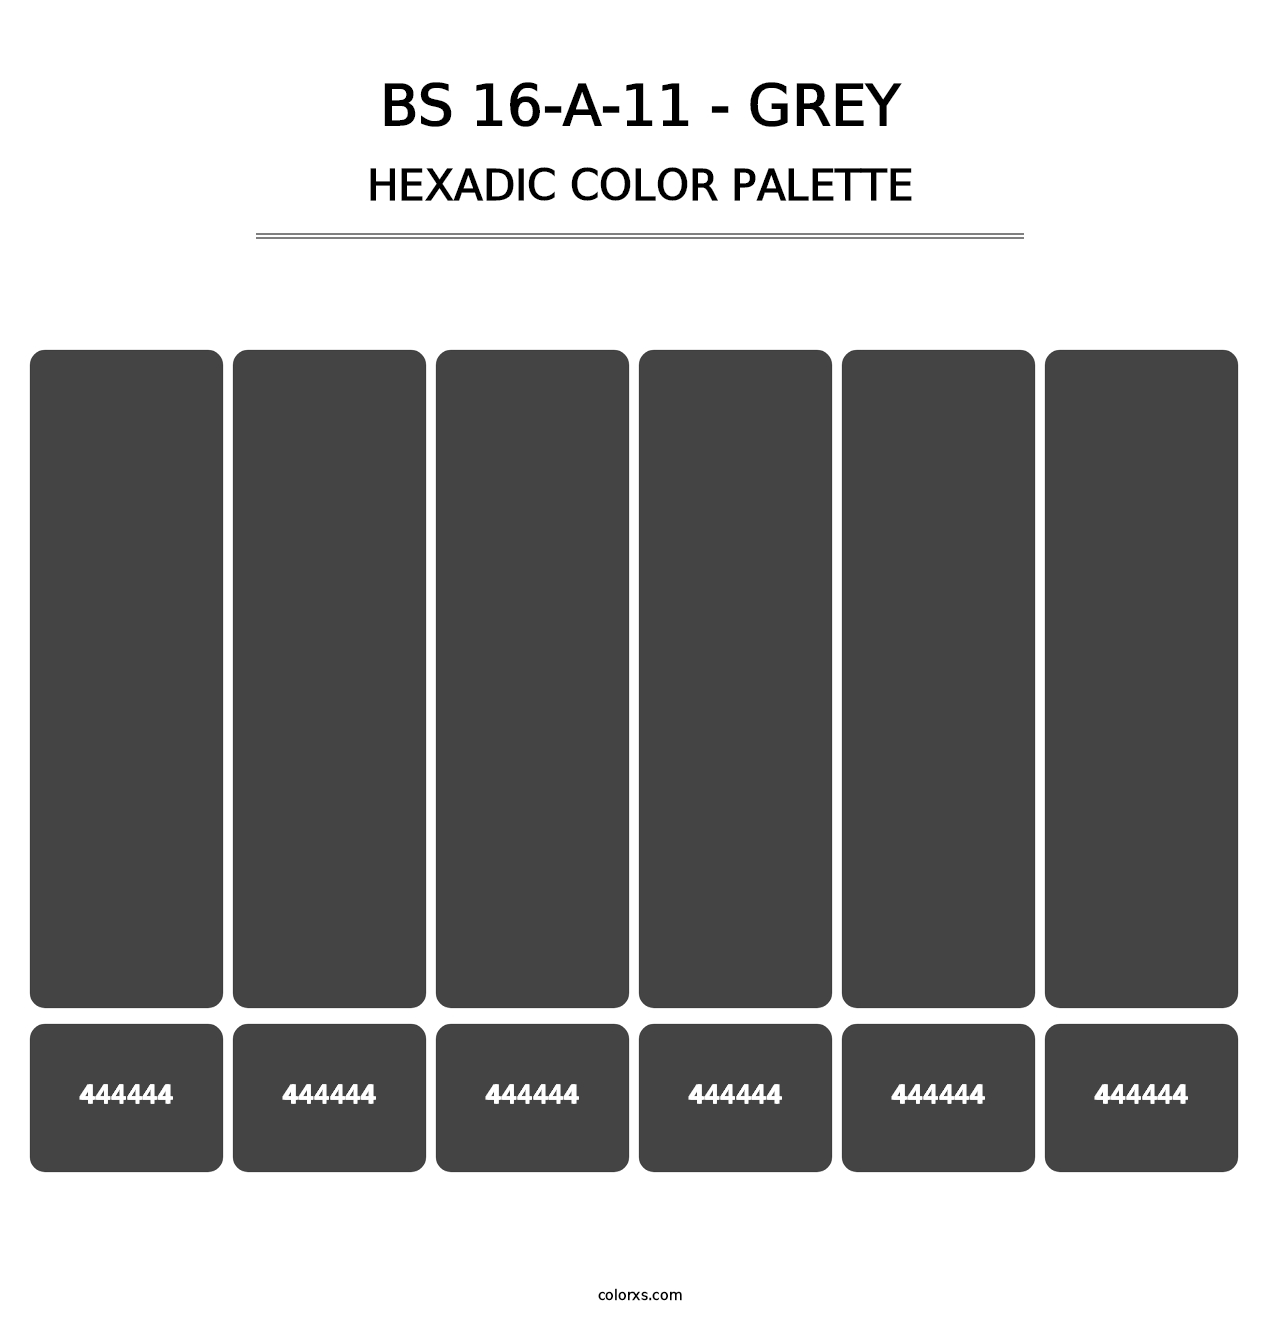 BS 16-A-11 - Grey - Hexadic Color Palette